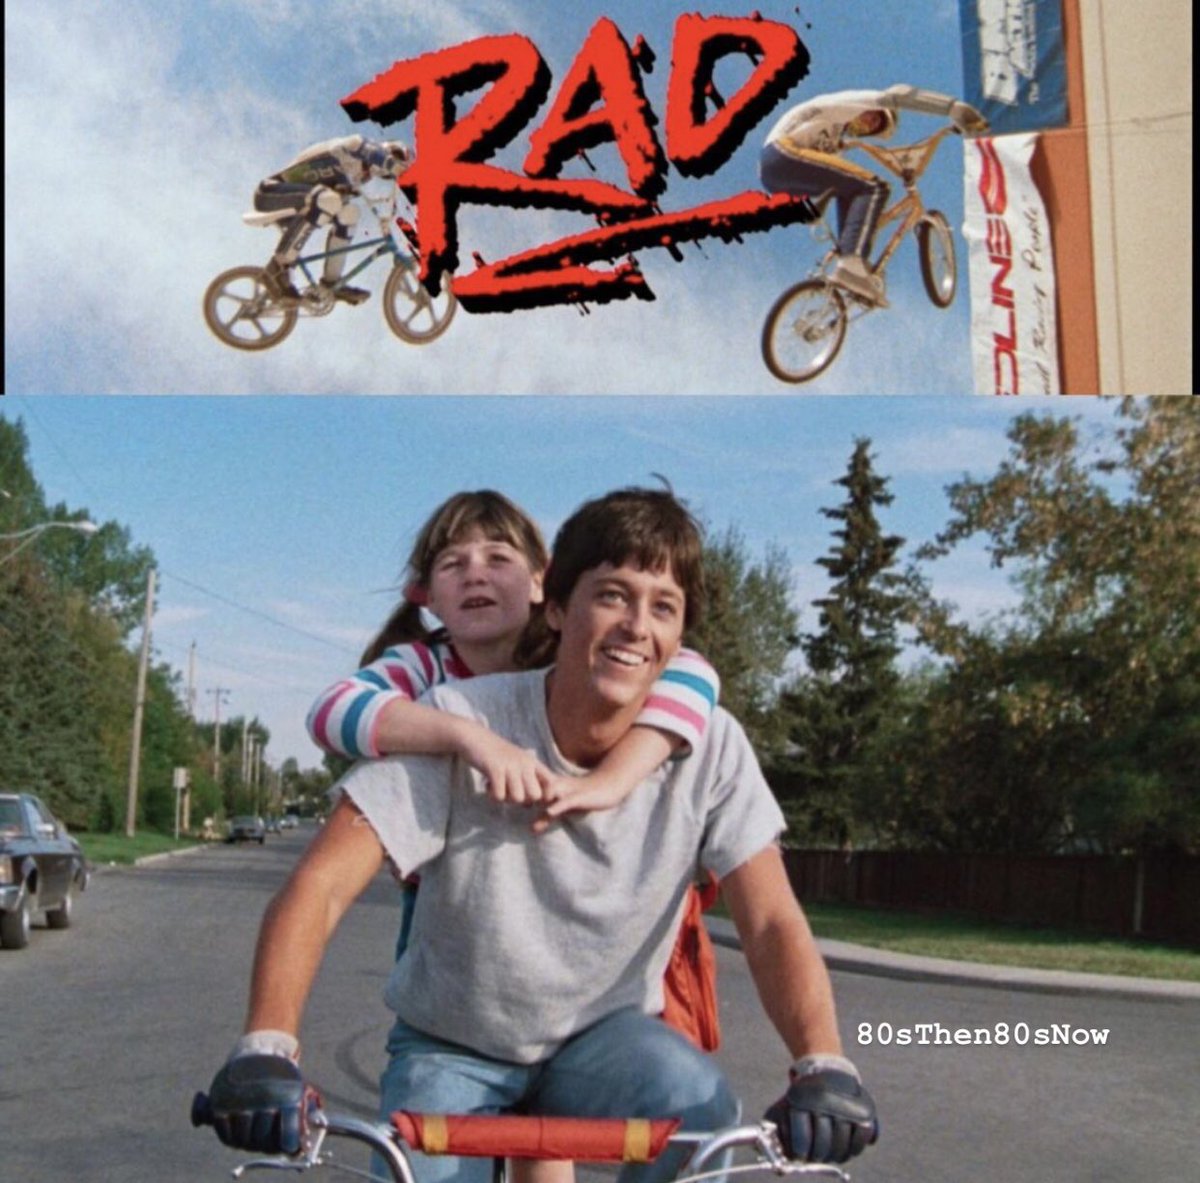 Who Remembers Watching the 1986 Movie “Rad?”

#Rad #Movies #Bike #Motorcross #BillAllen #LoriLoughlin #BartConner #TaliaShire #RayWalston #JackWeston #MartaKober #HardBoiledHaggerty